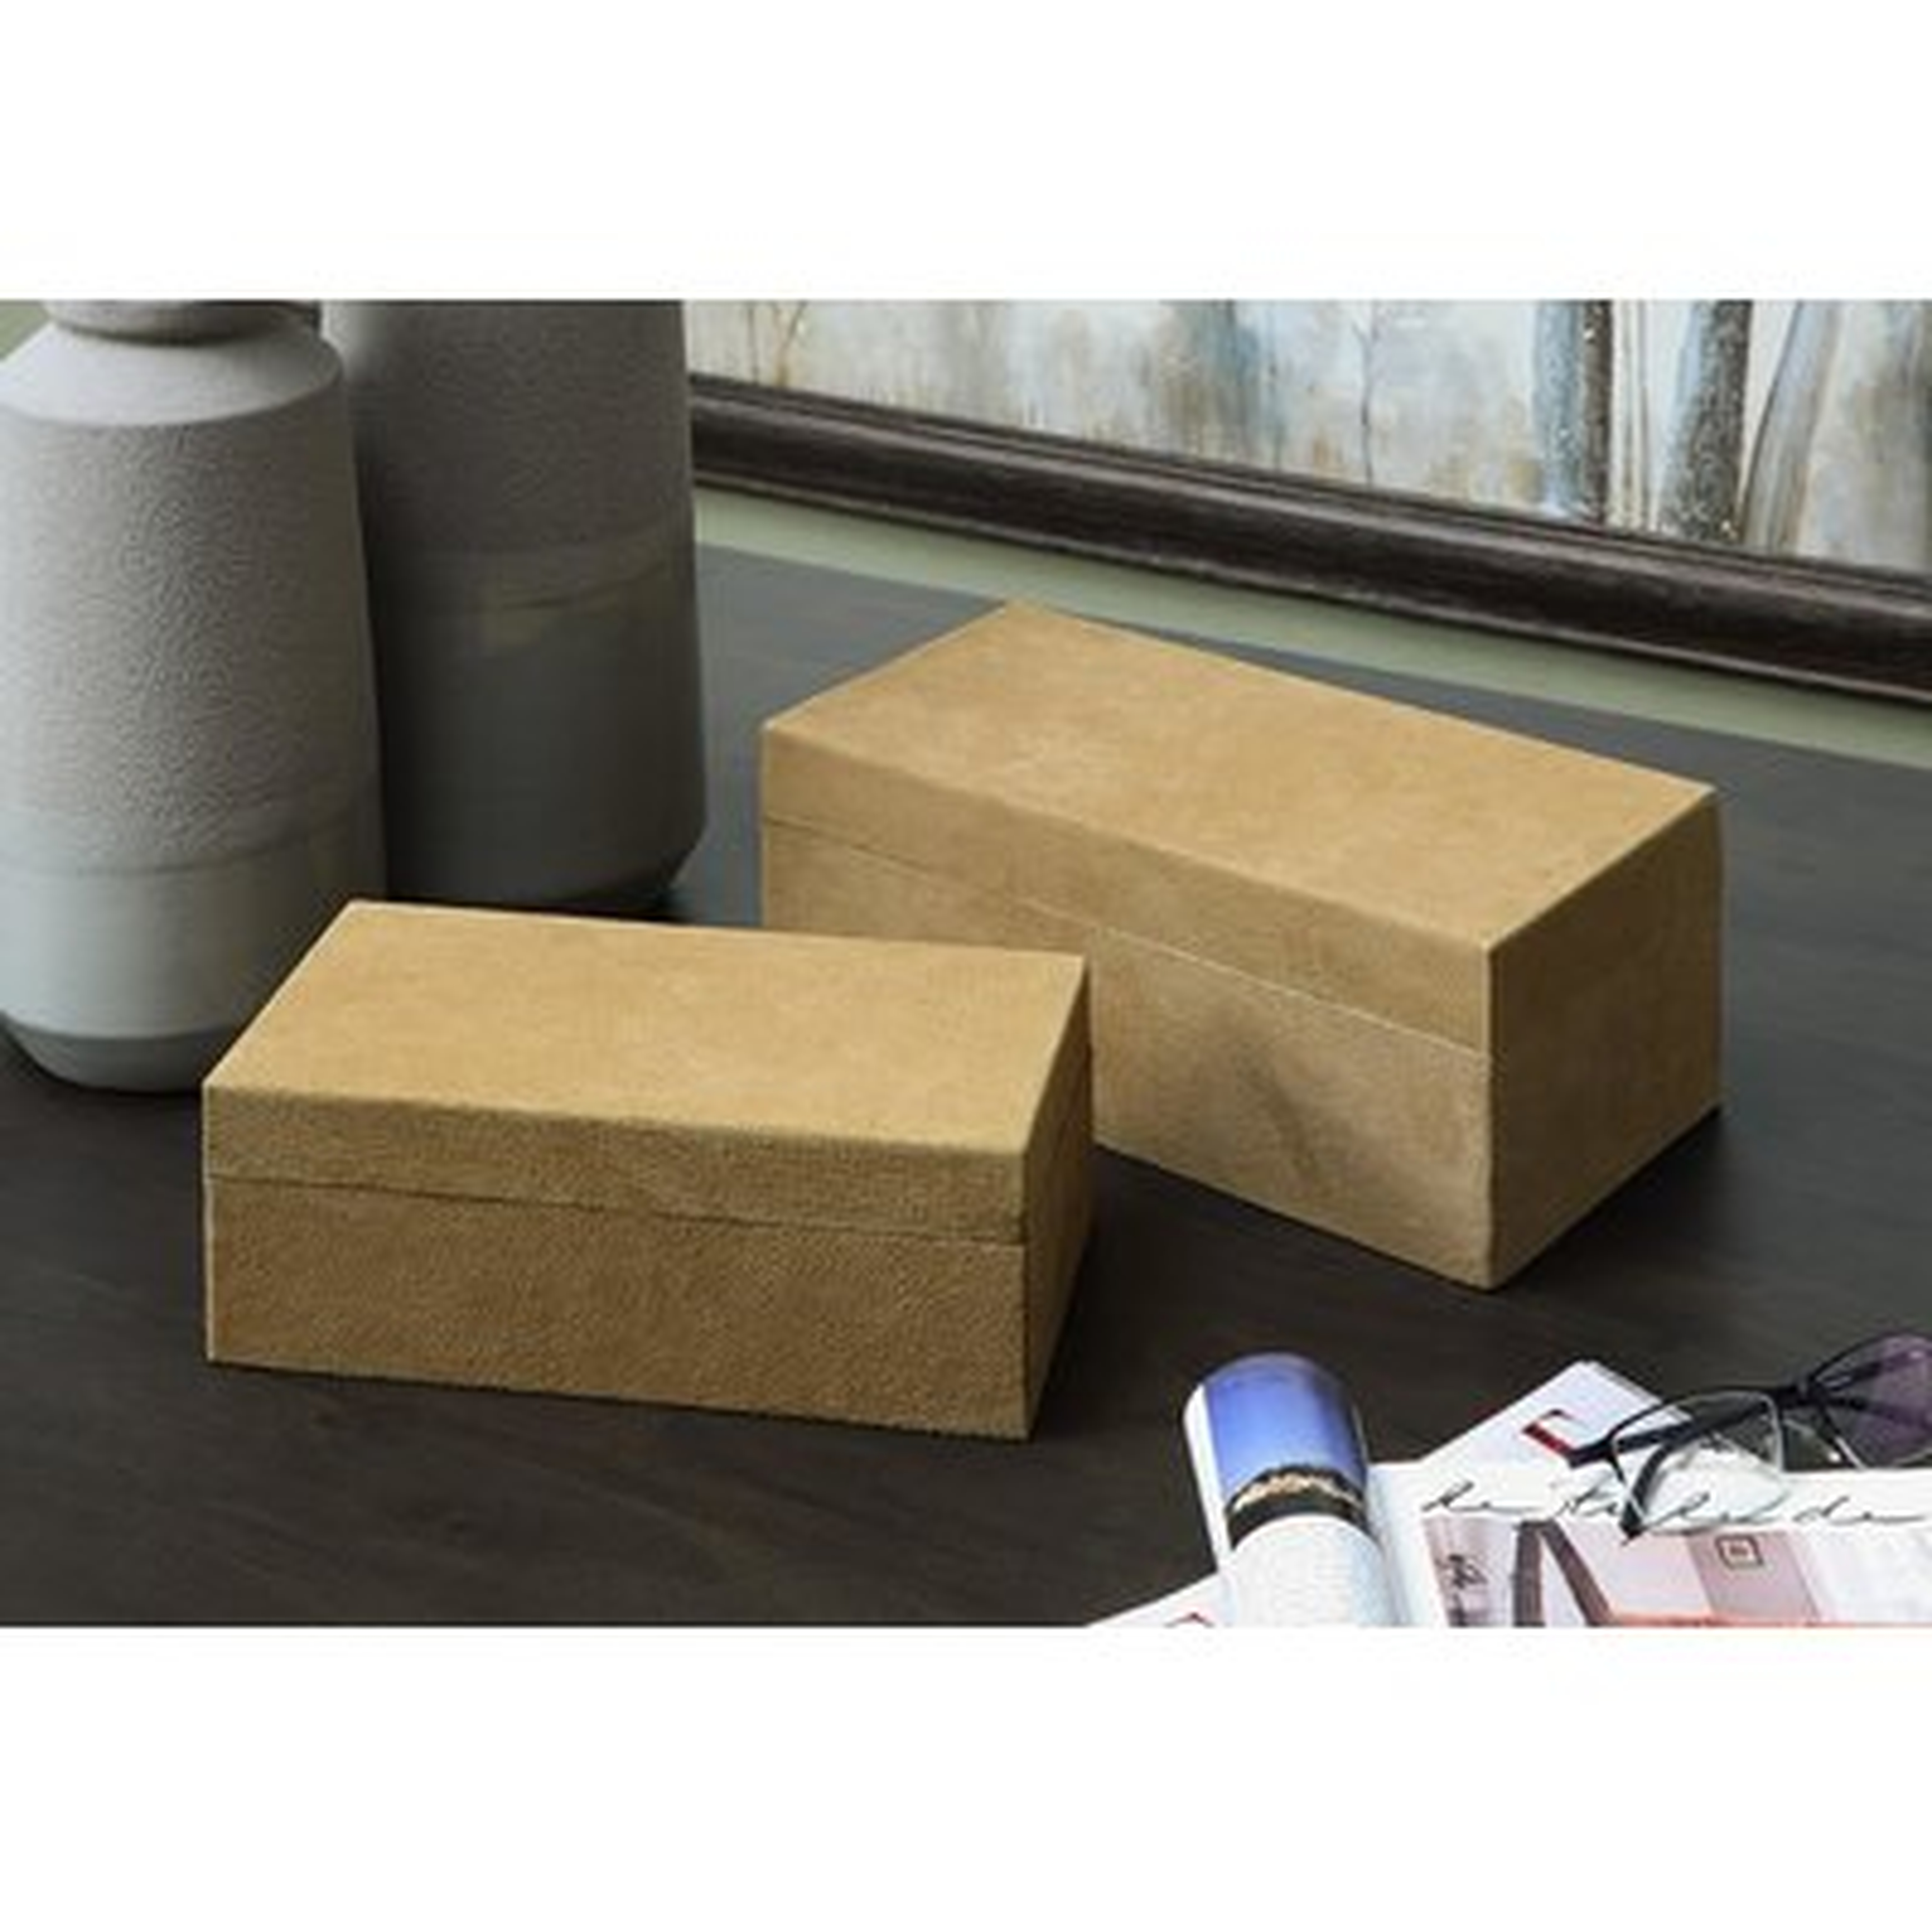 Winkelman Wood and Suede Leather 2 Piece Decorative Box Set - Wayfair